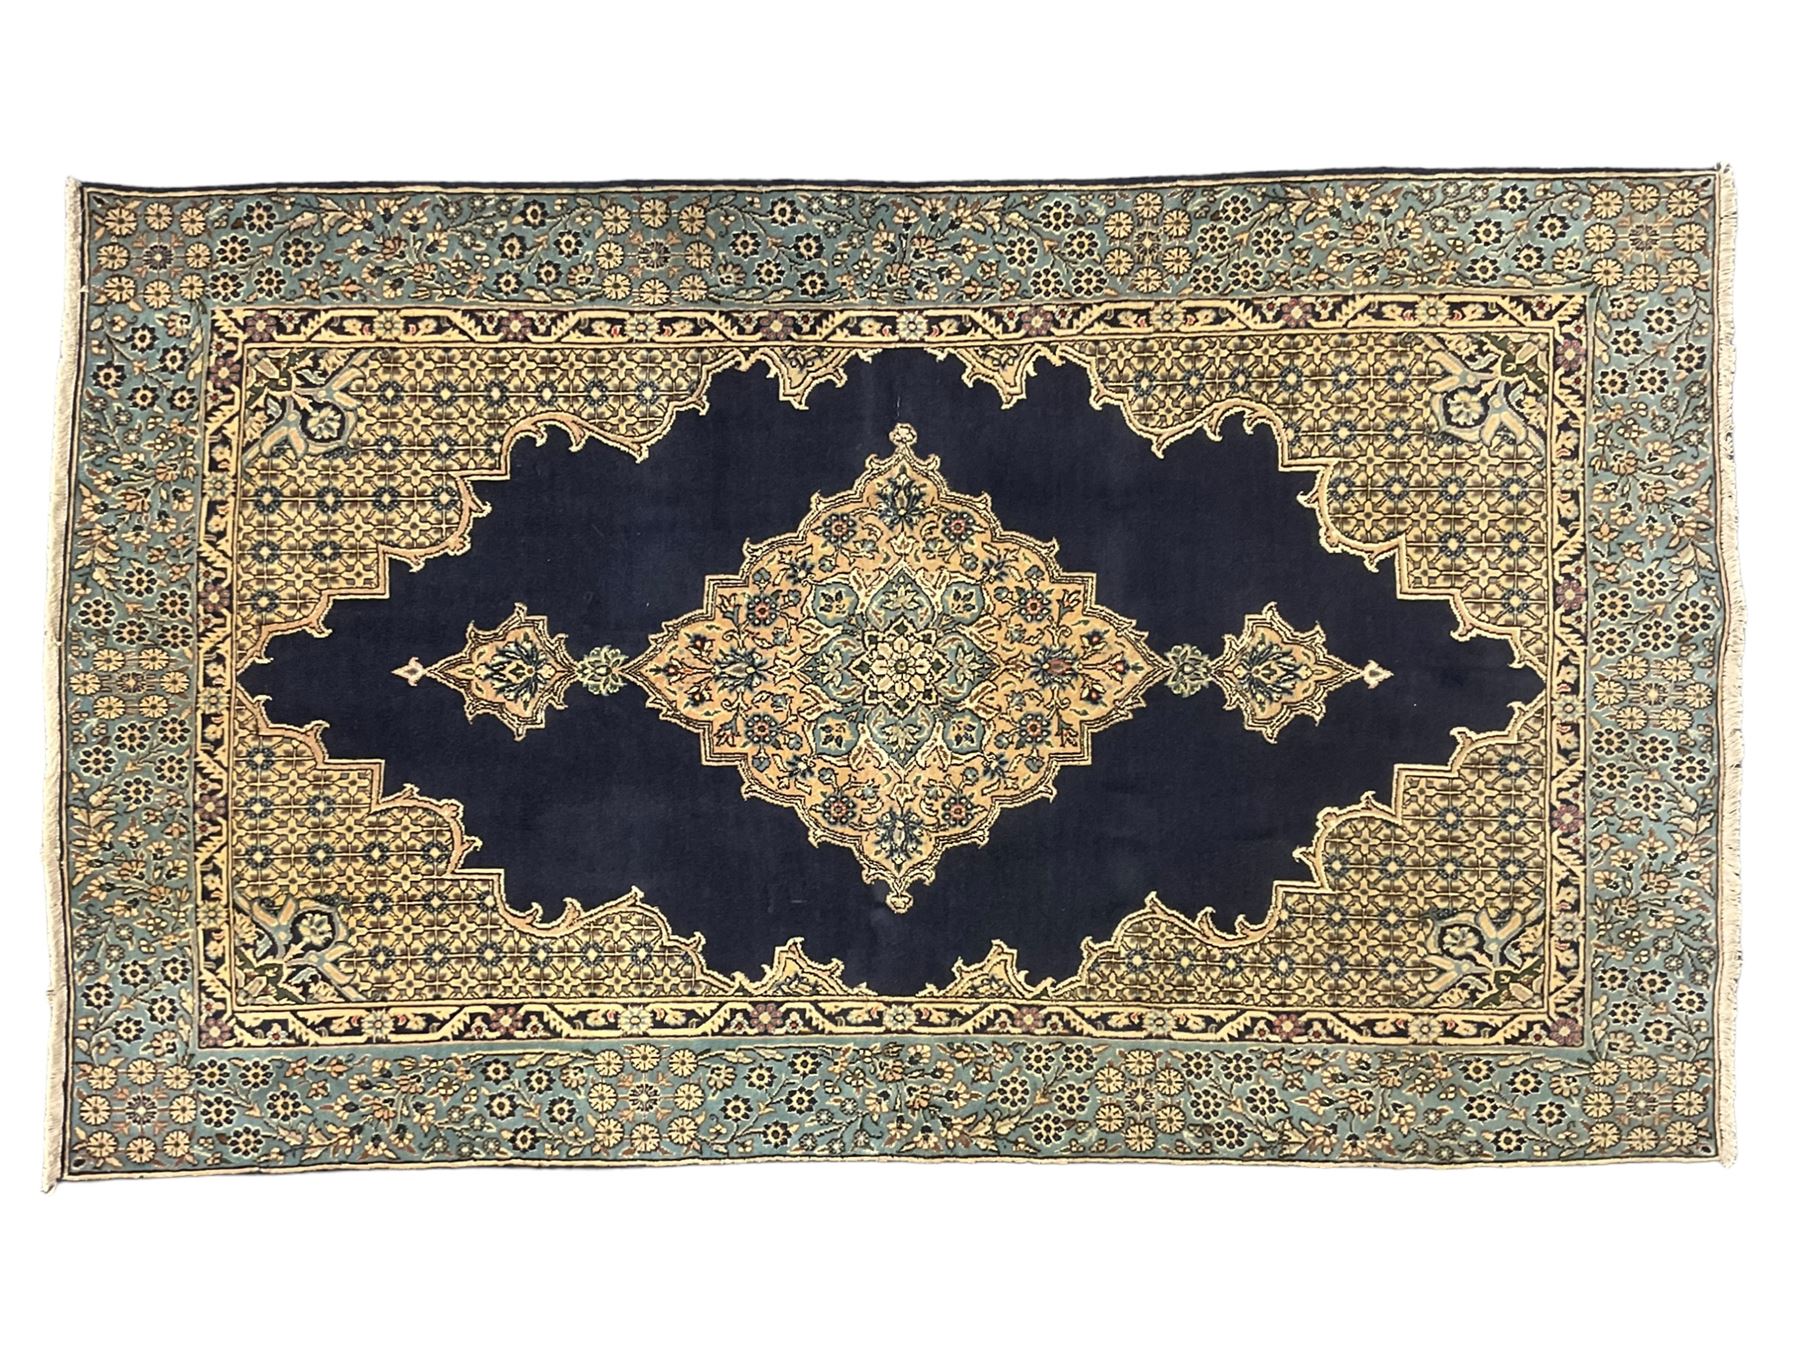 Central Persian Qum indigo ground rug with silk inlay